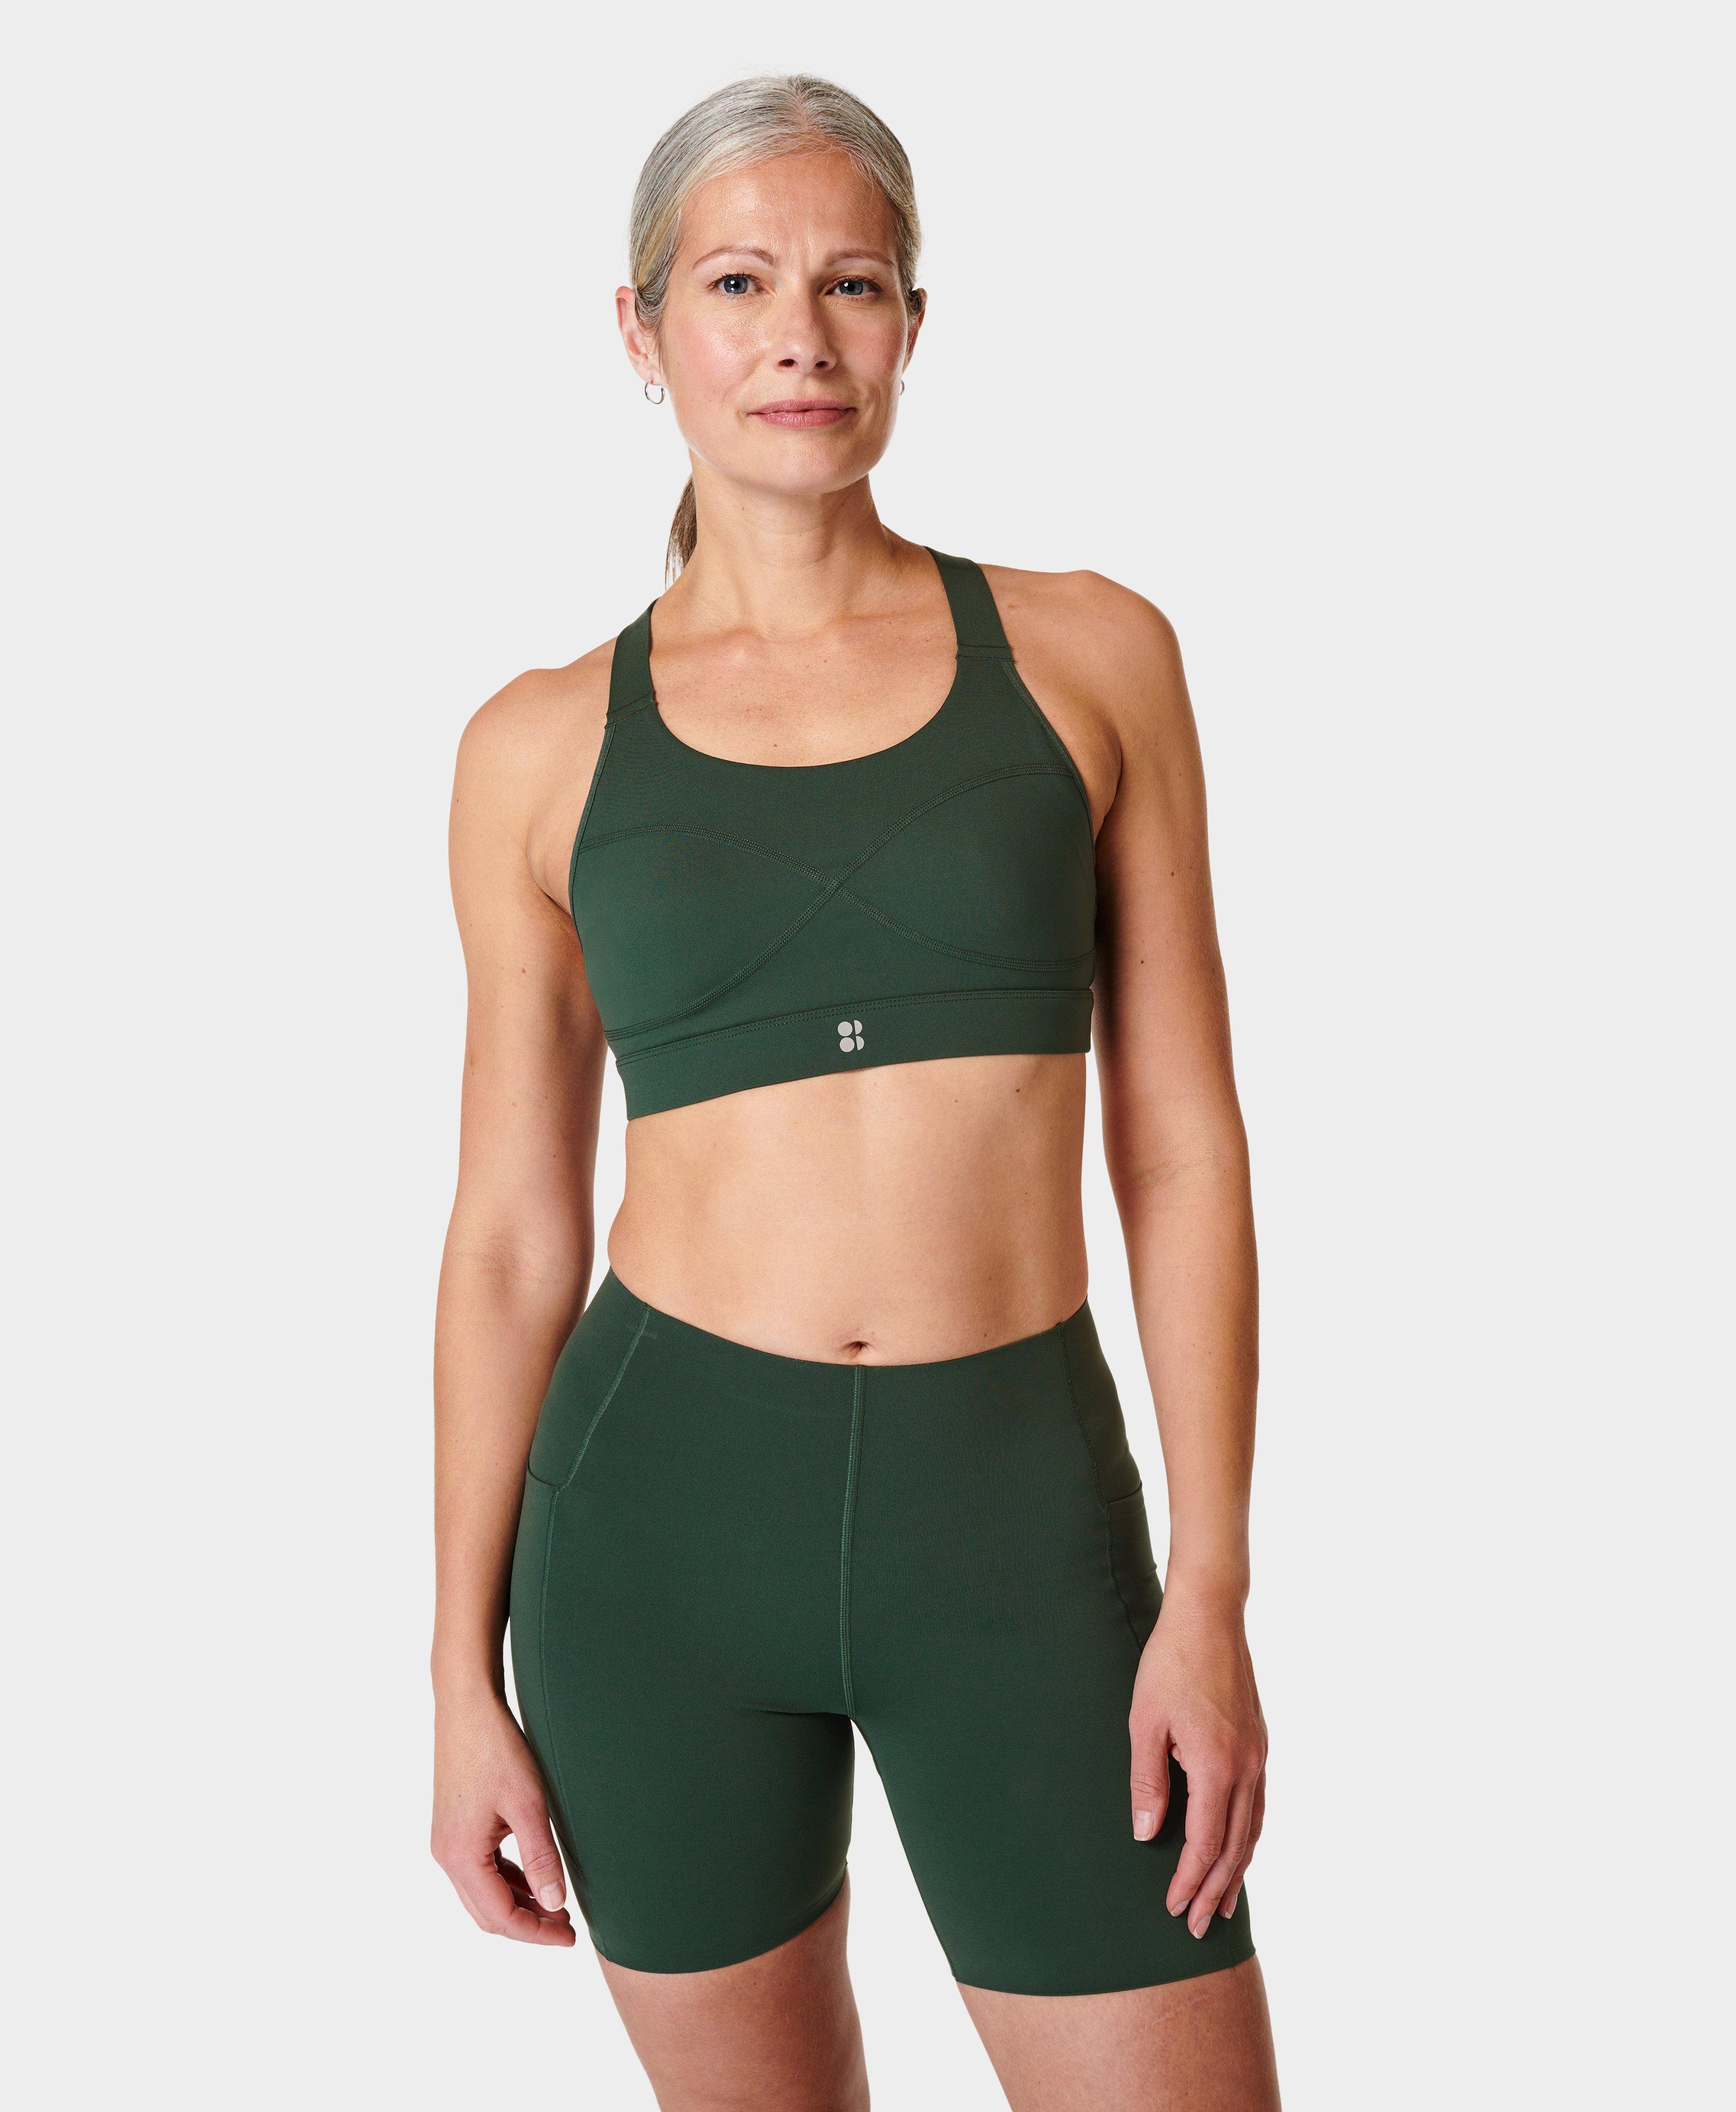 Bass Outdoor Women's Benton Po Back Pocket Sports Bra Green Size Medium 